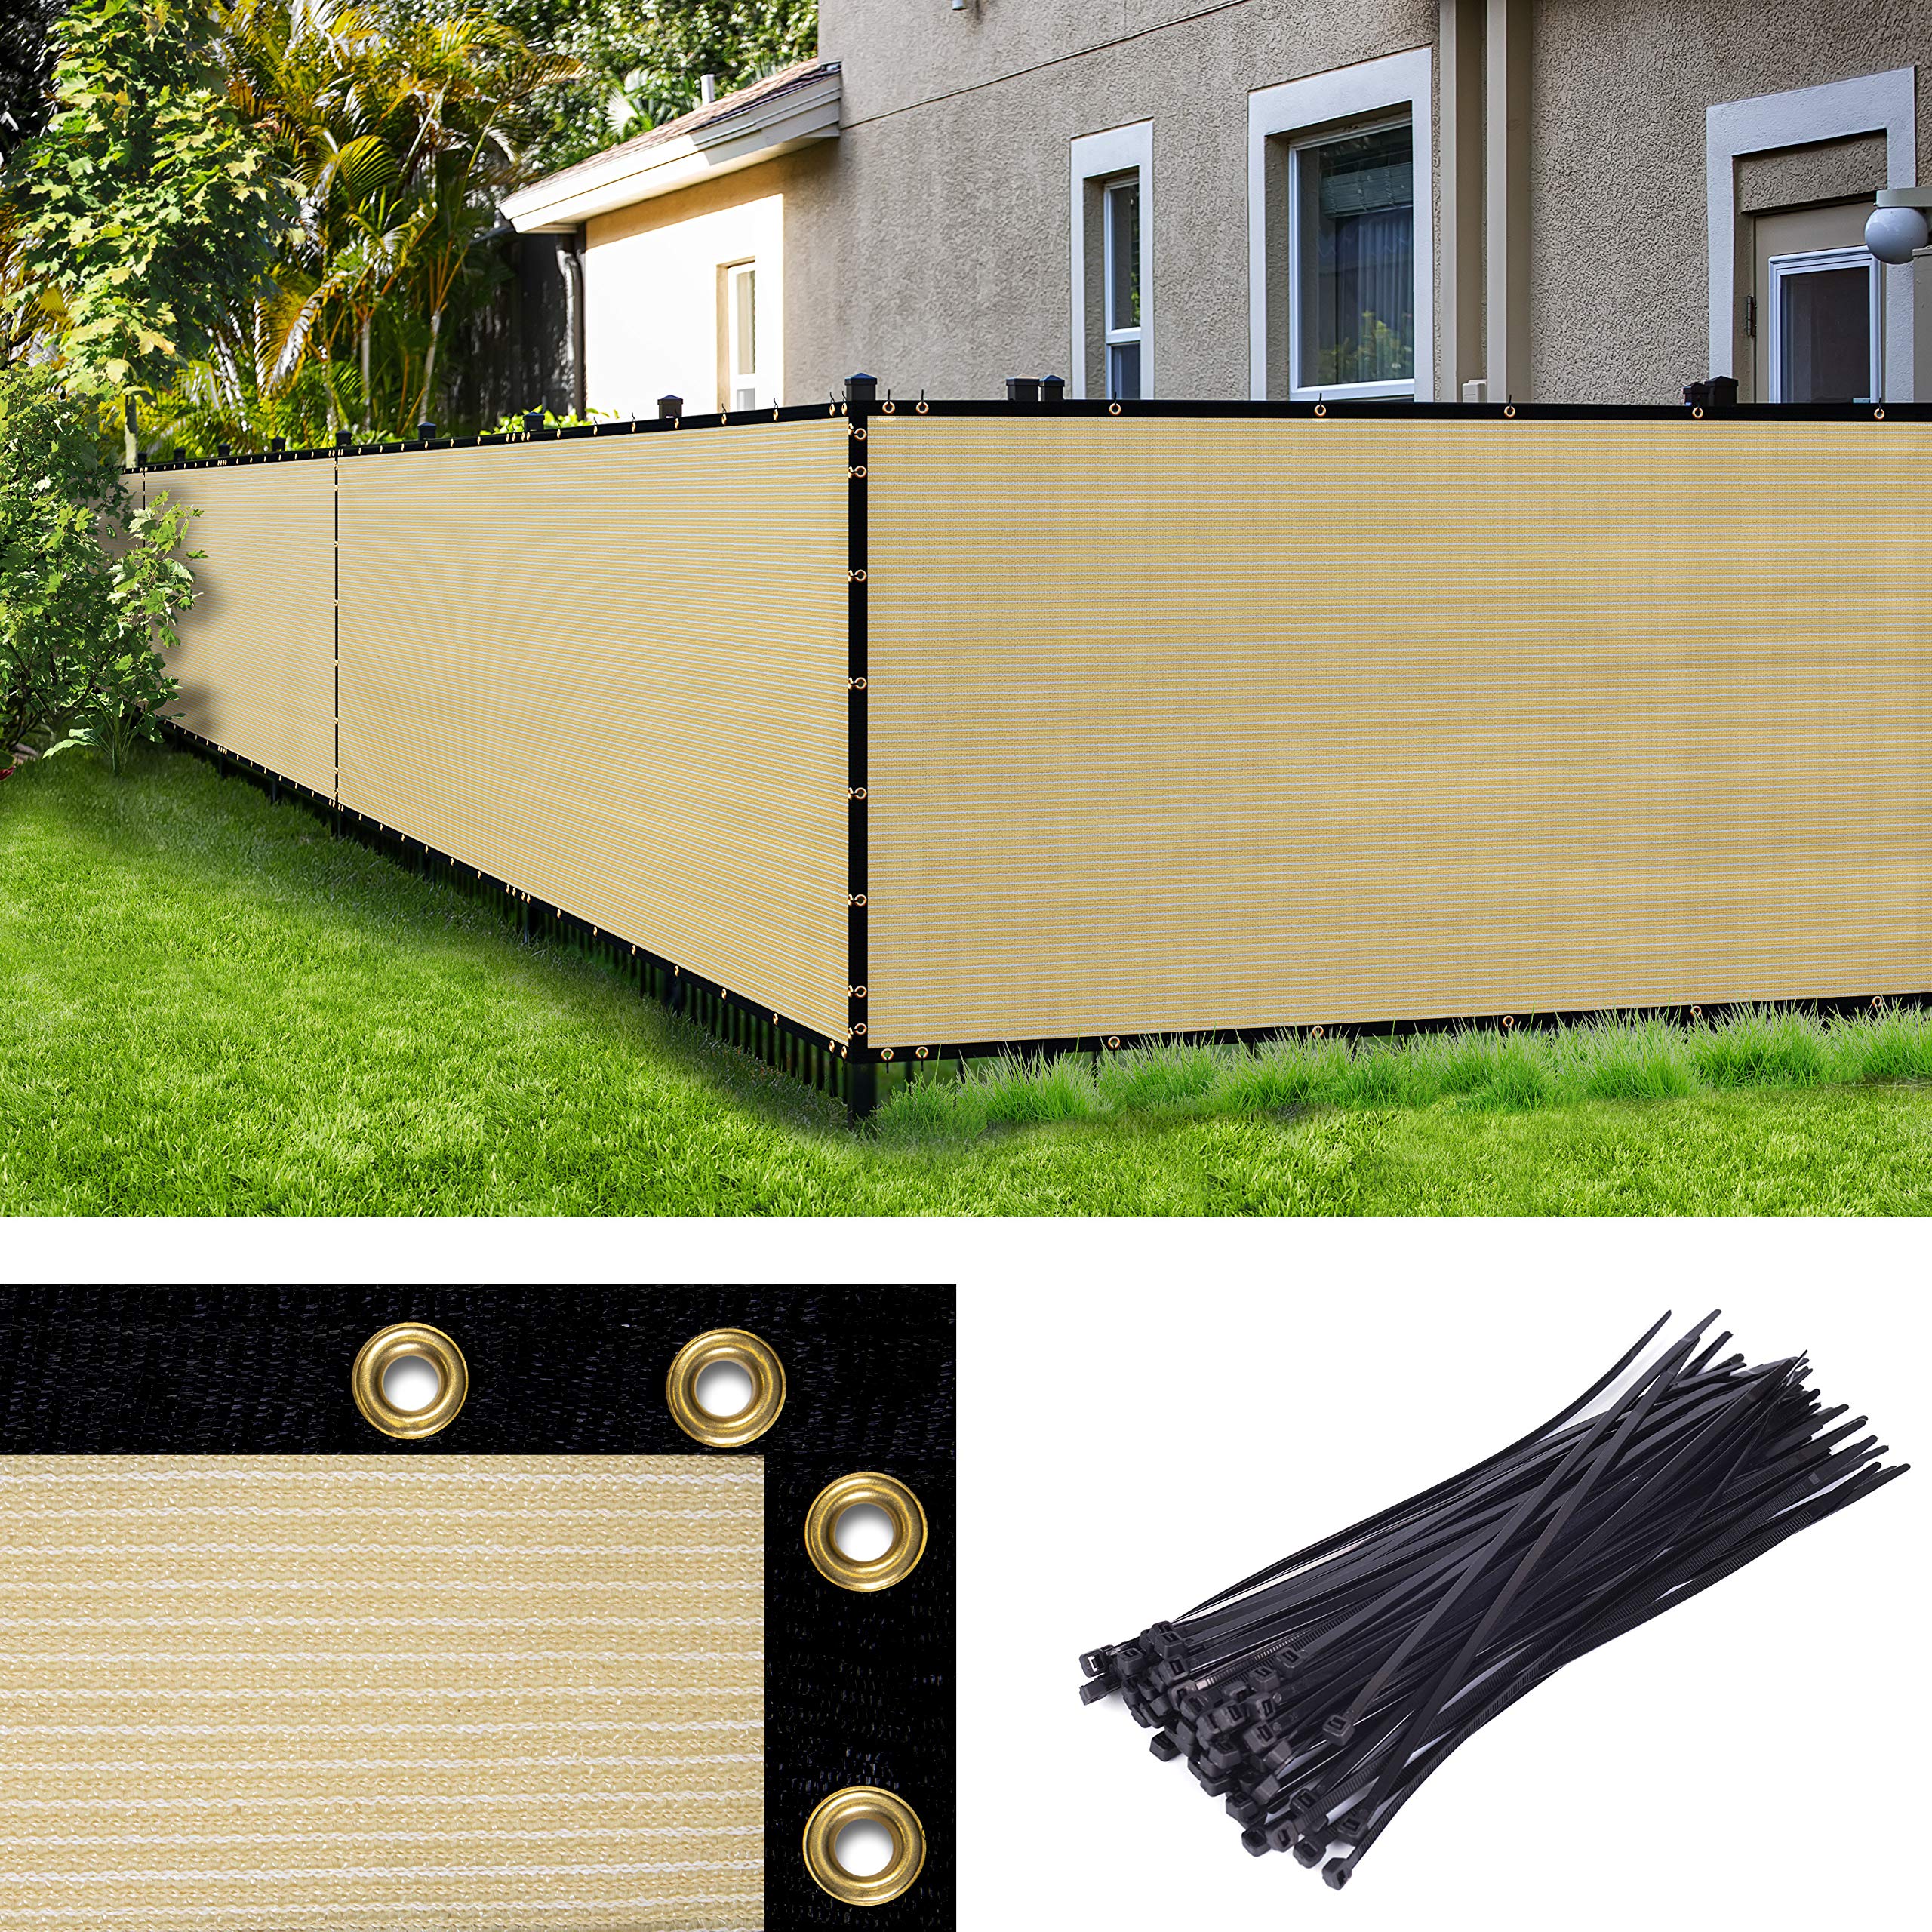 Amgo custom Made 4 x 109 custom Size Beige Fence Privacy Screen Windscreen,with Bindings & grommets Heavy Duty commercia